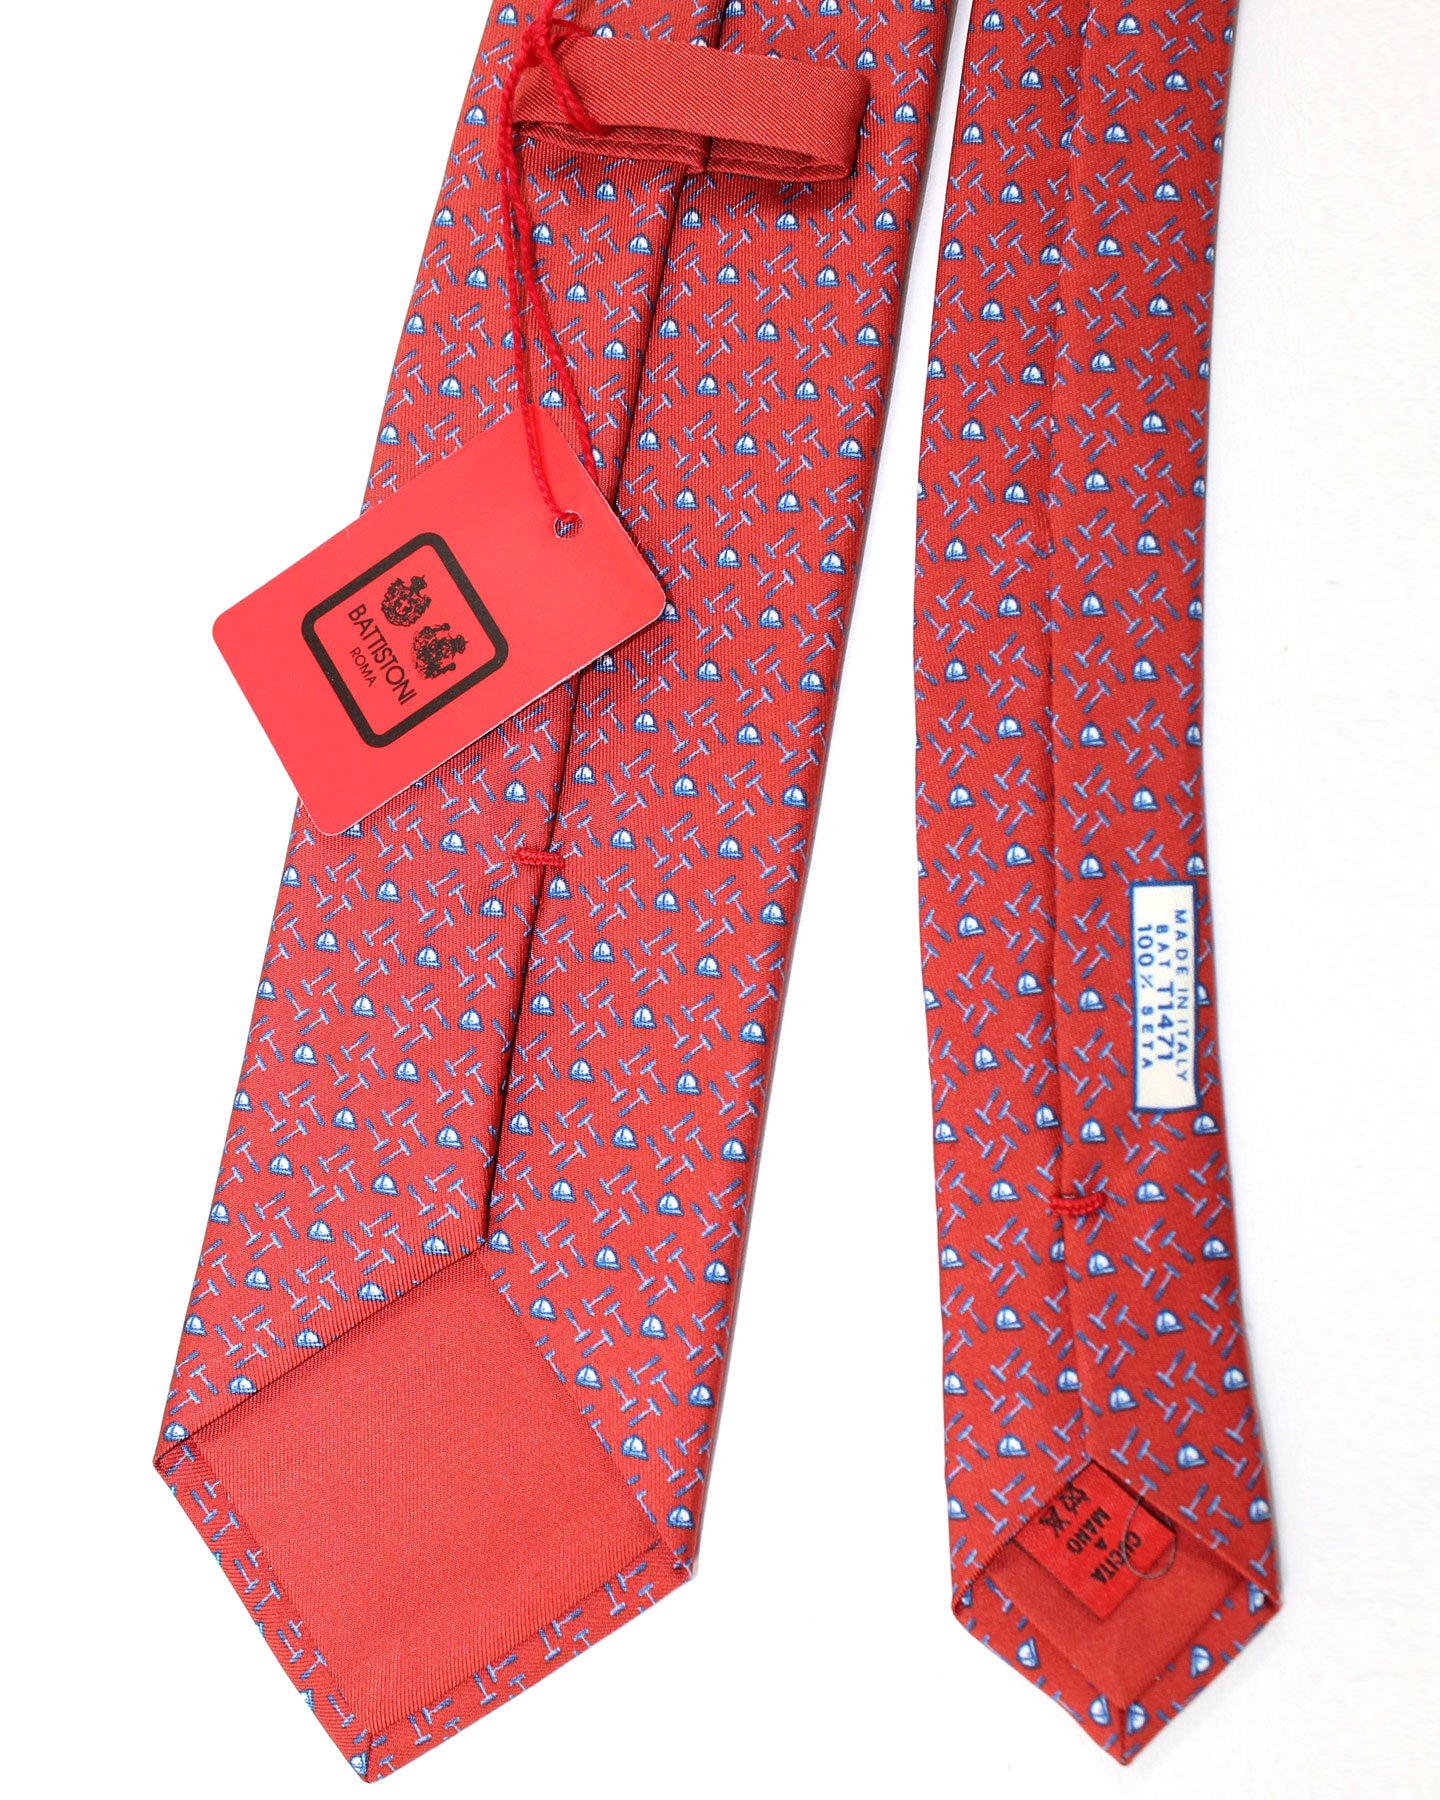 Pañuelo rojo (paquete de 12) The Beistle Company 60753-R